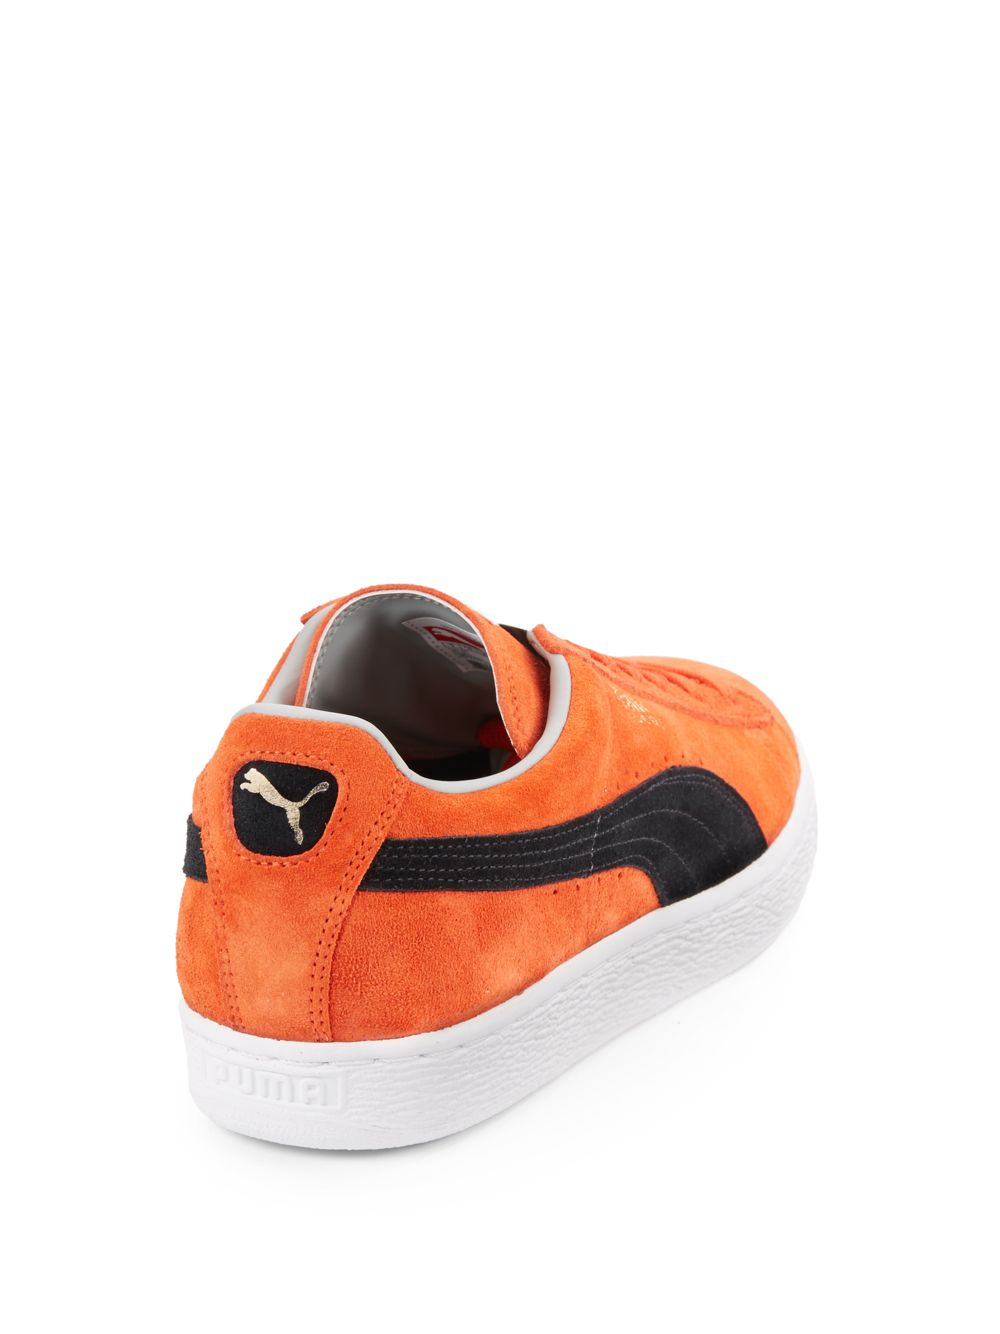 Puma Suede Classic Sneakers In Orange For Men Lyst